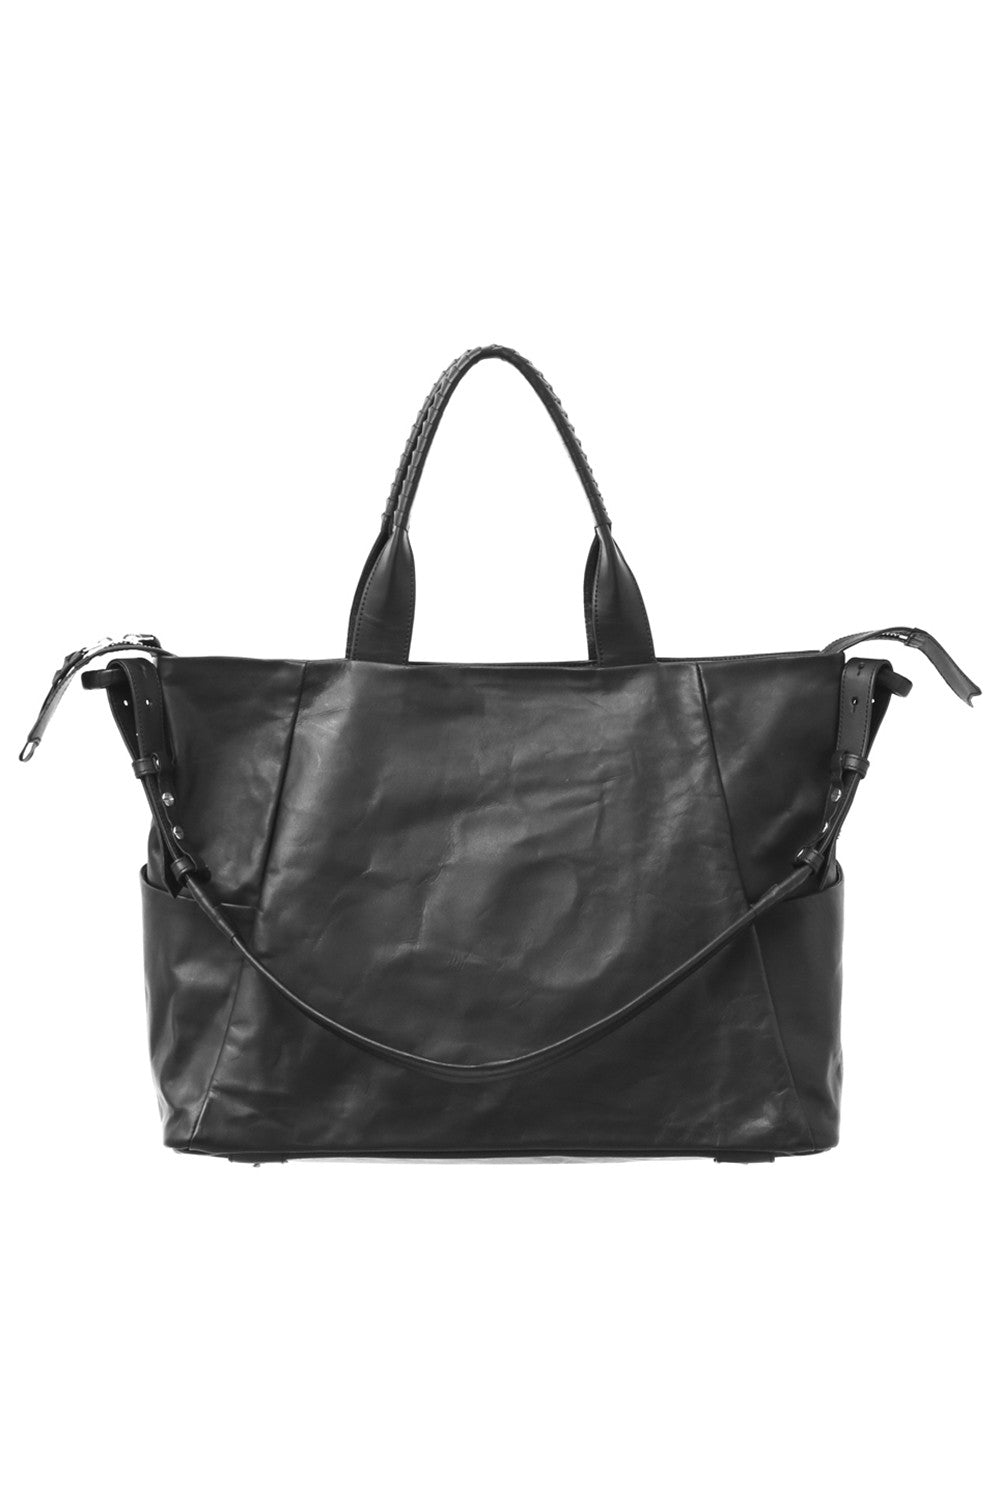 co15ssws020 | Wall shouder bag | cornelian taurus | Online Store ...